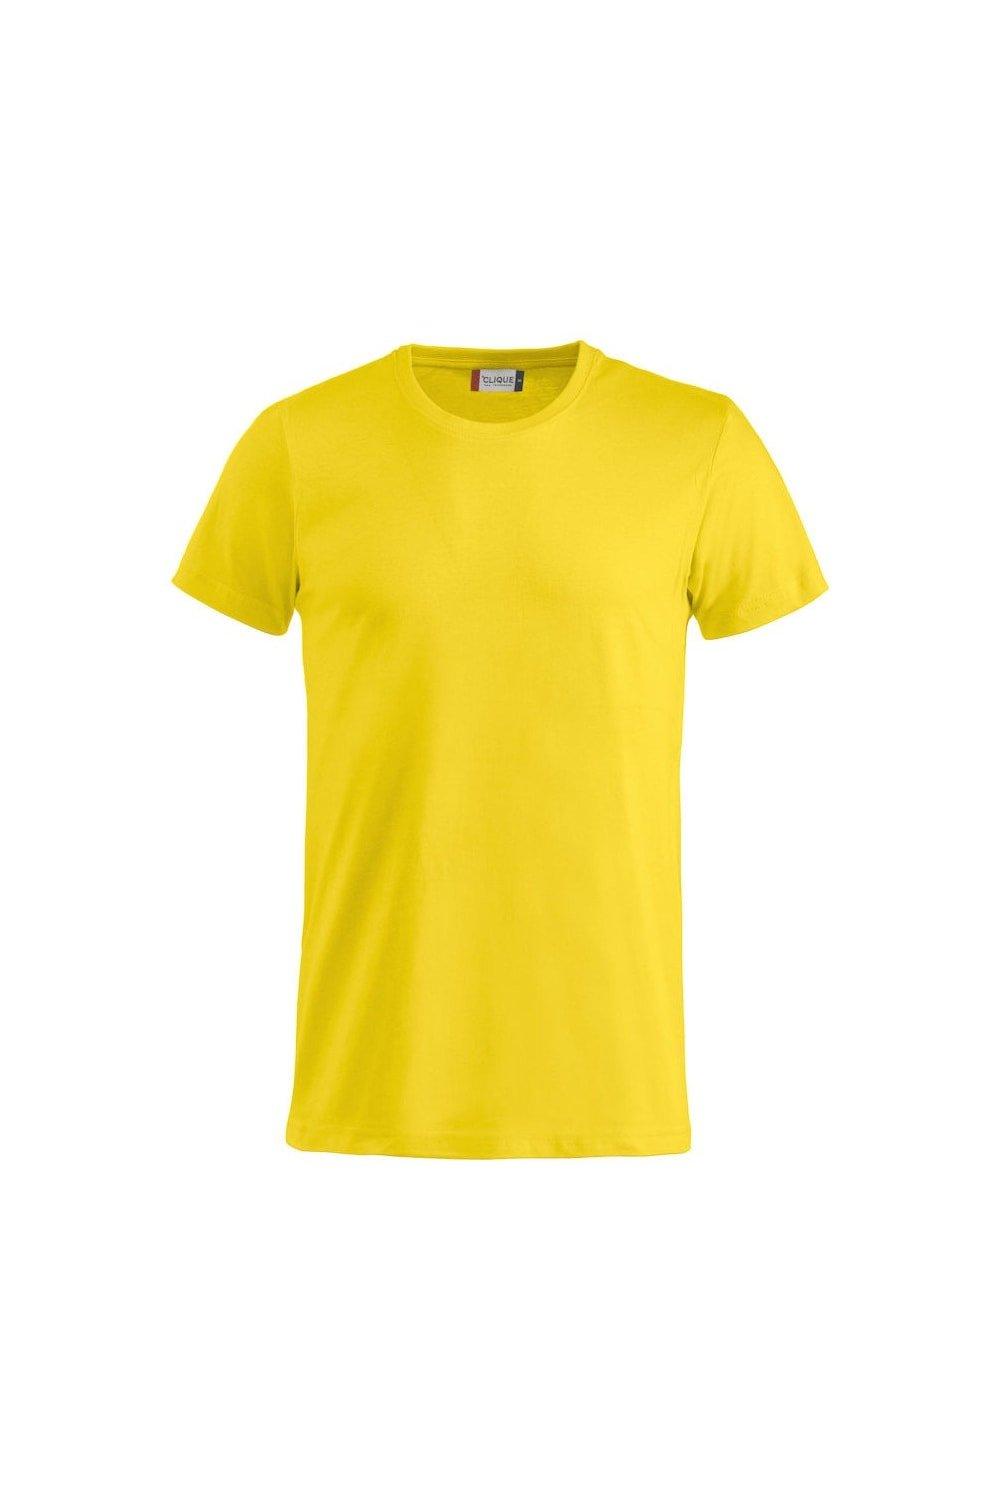 Базовая футболка Clique, желтый футболка clique с надписью 42 размер